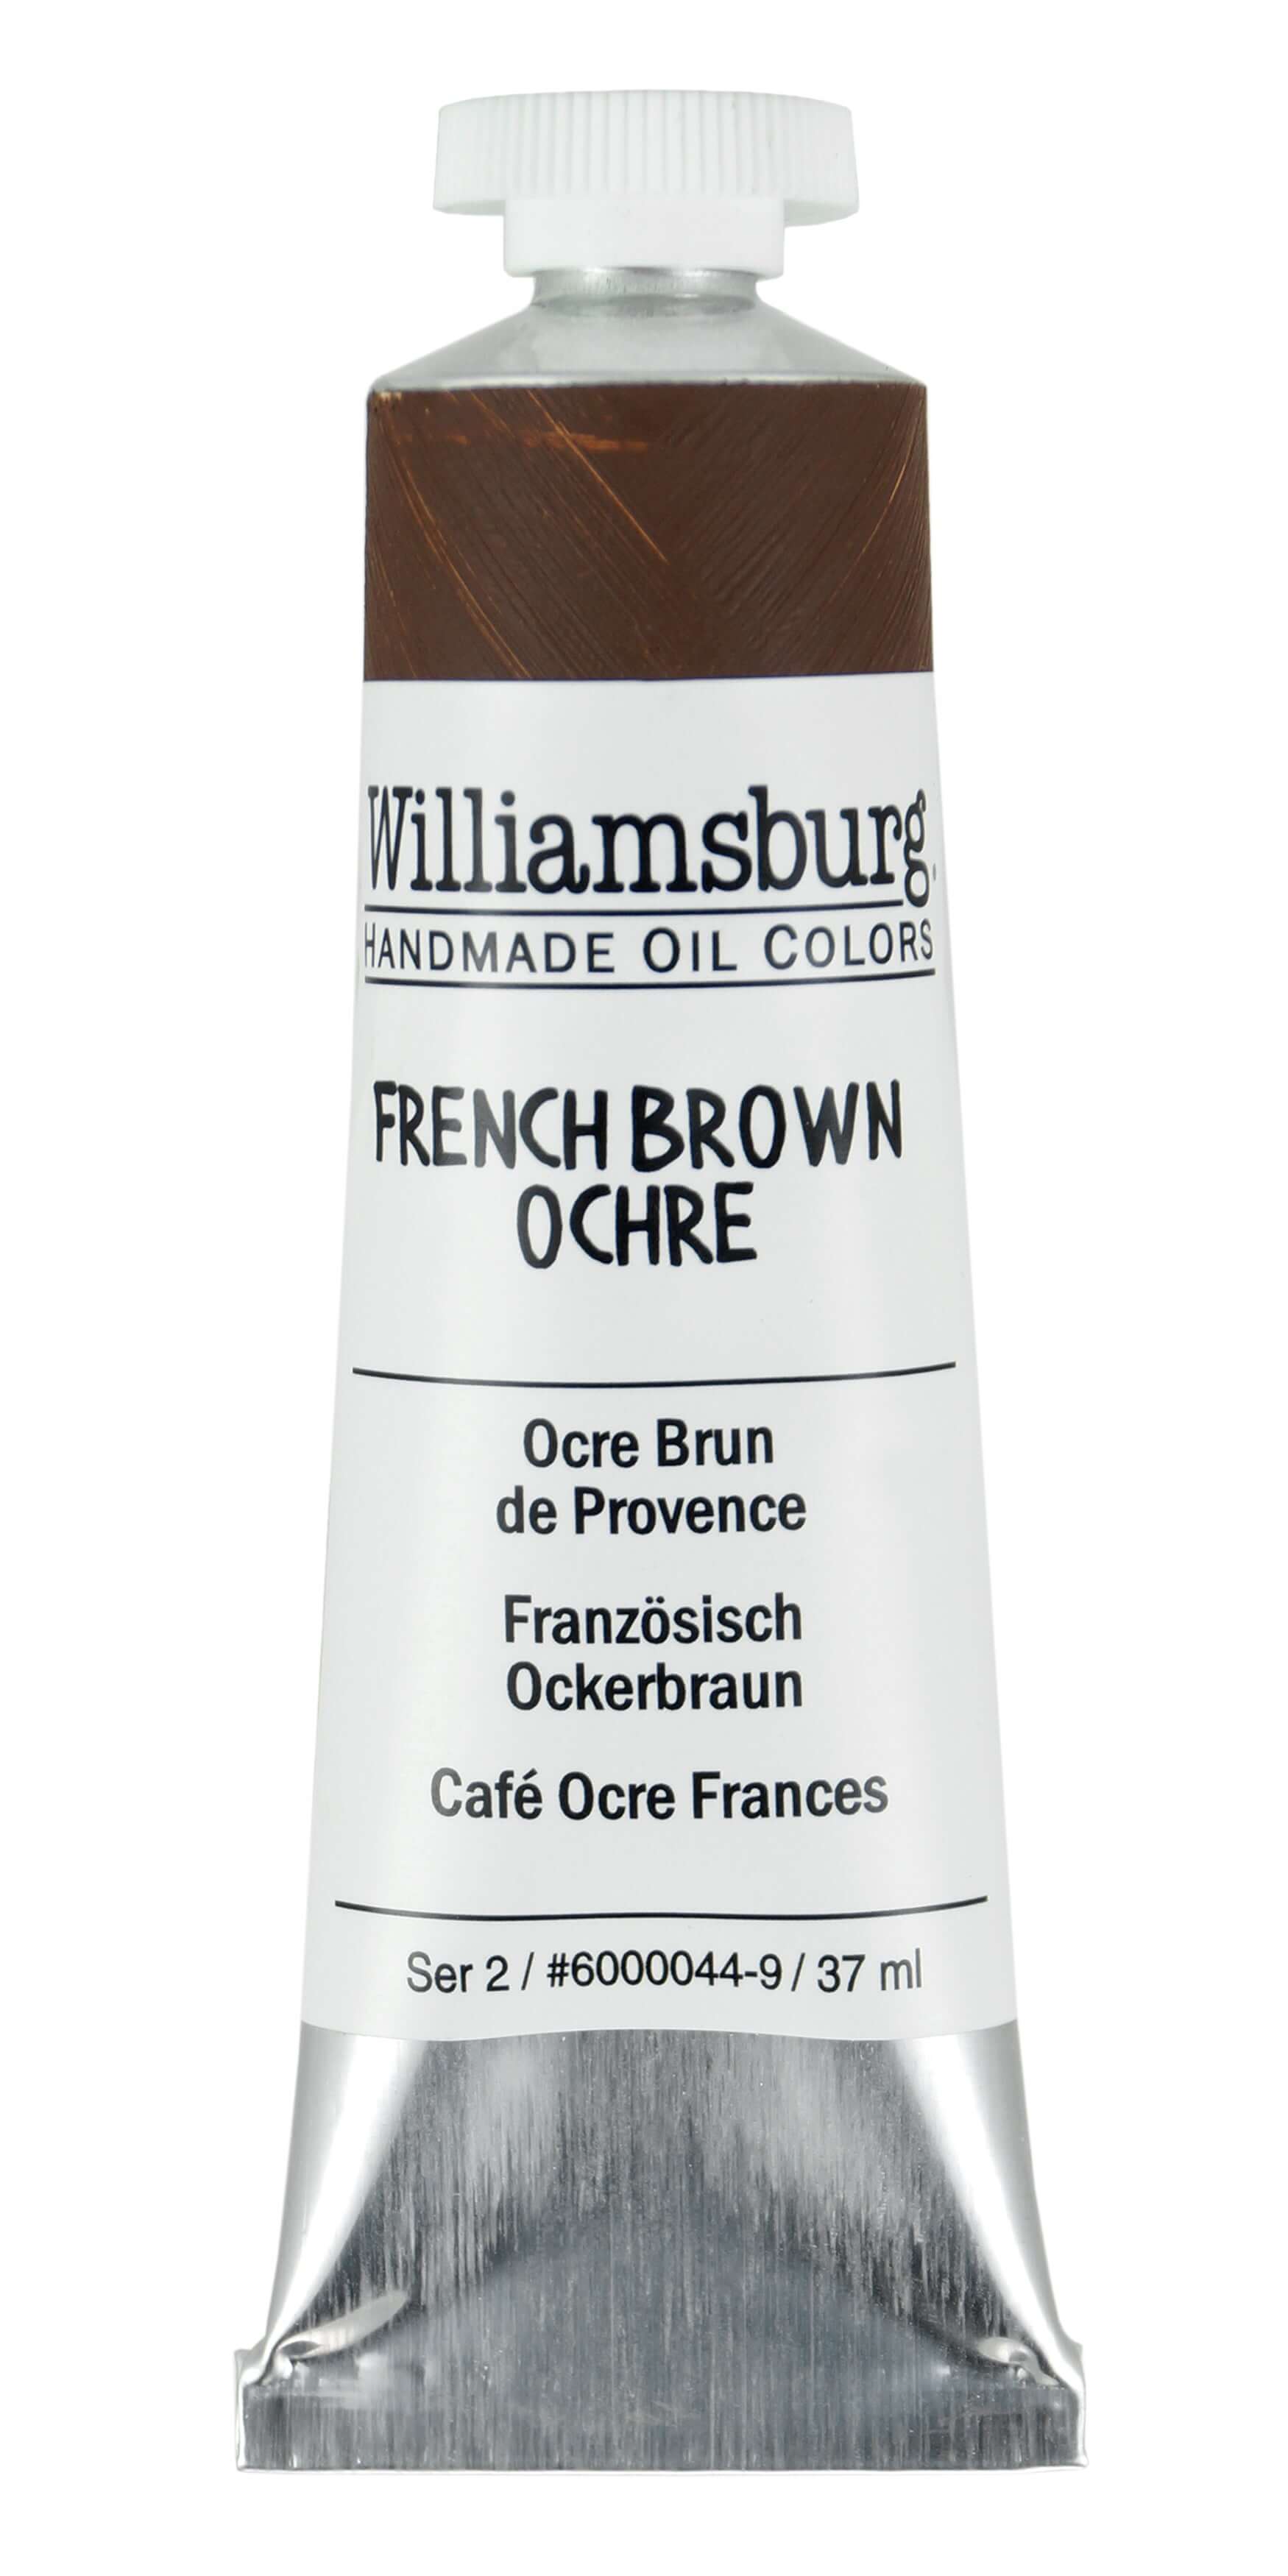 Williamsburg Oliemaling French Brown Ochre